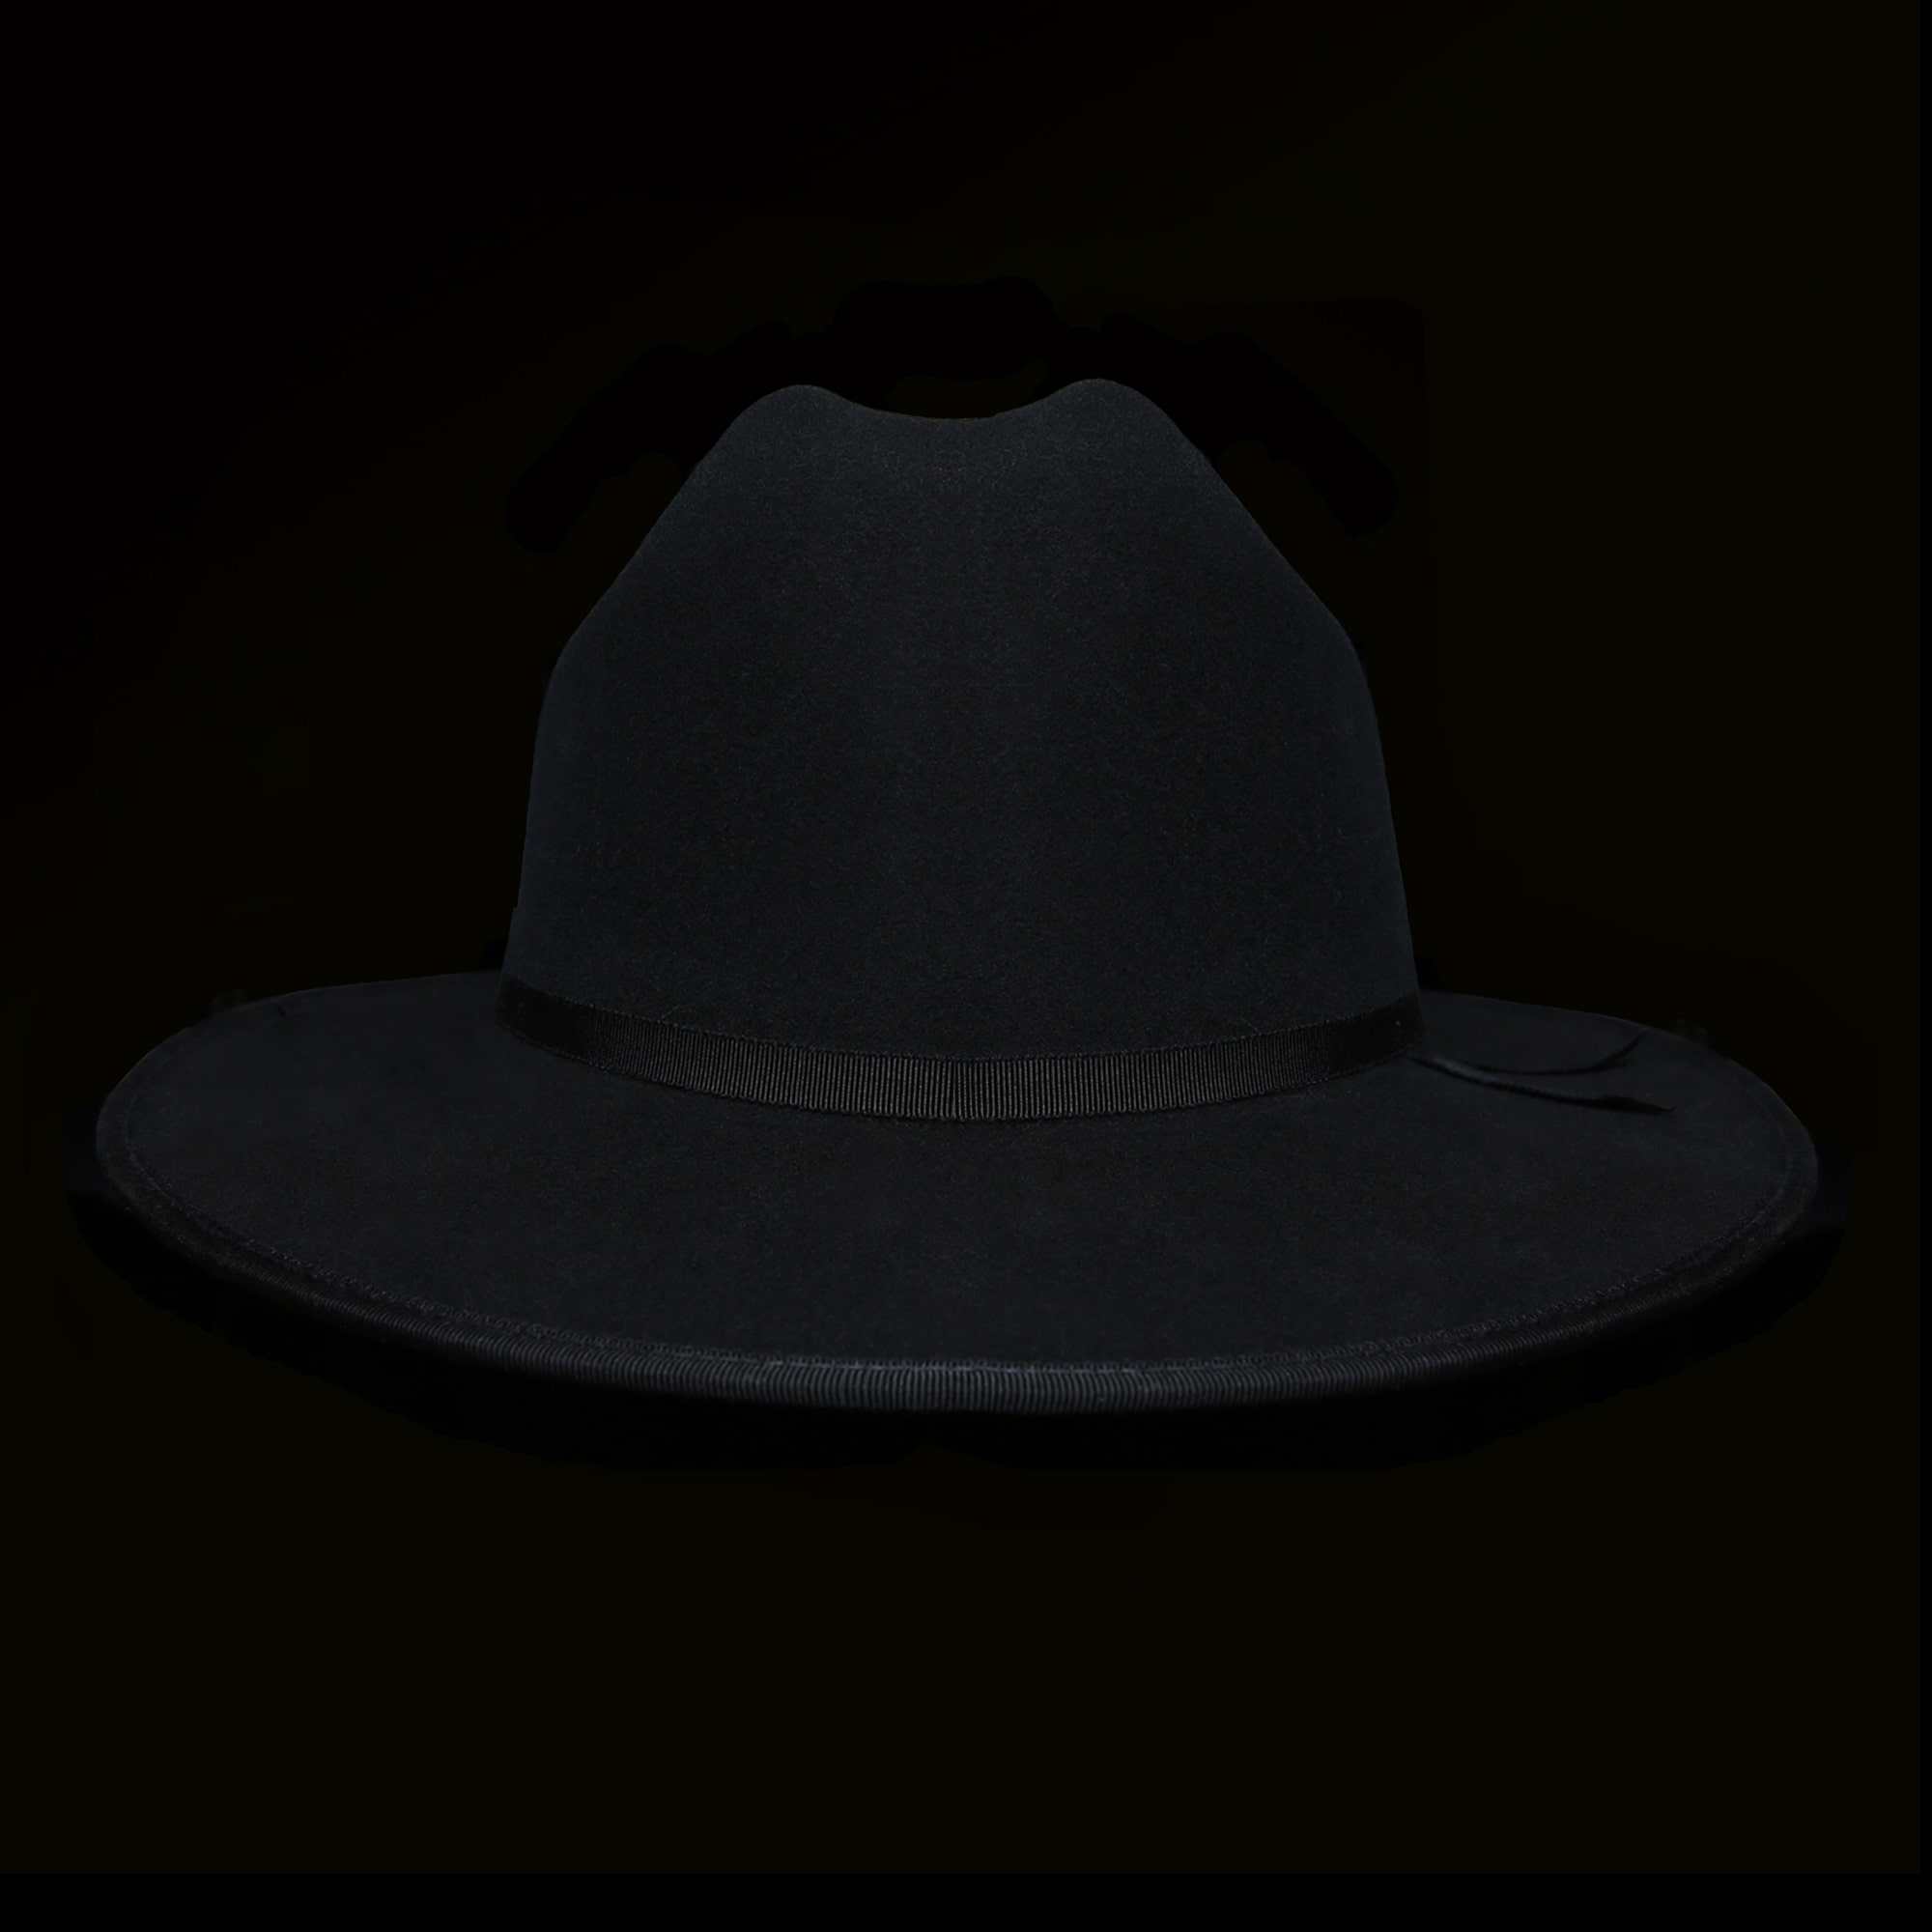 RRLCATTLEMAN BLACK HAT